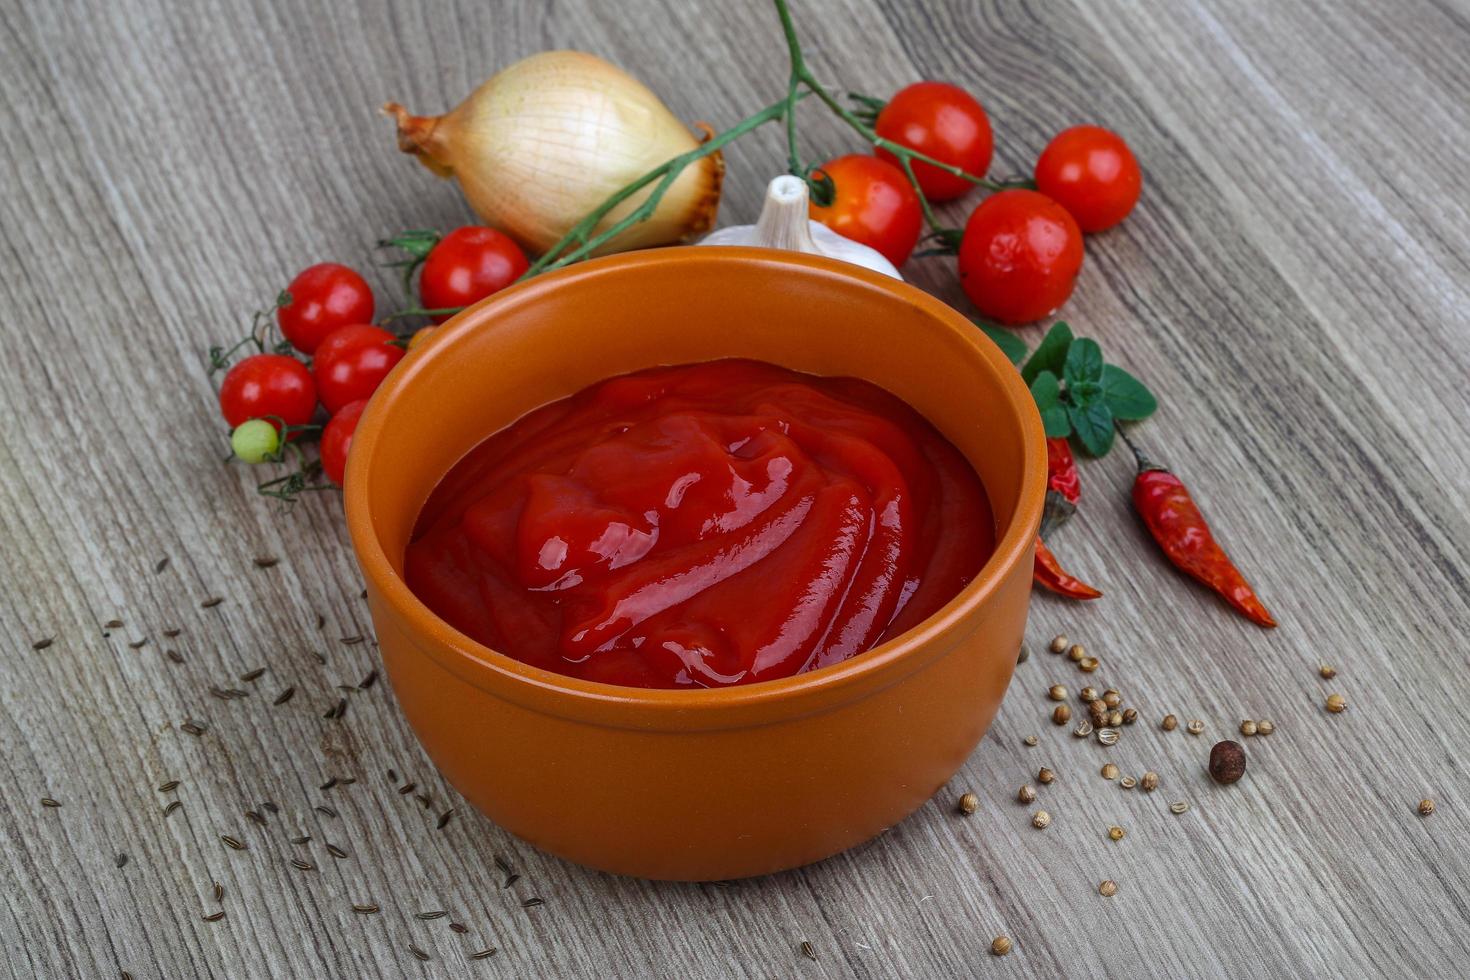 tomat ketchup på trä foto